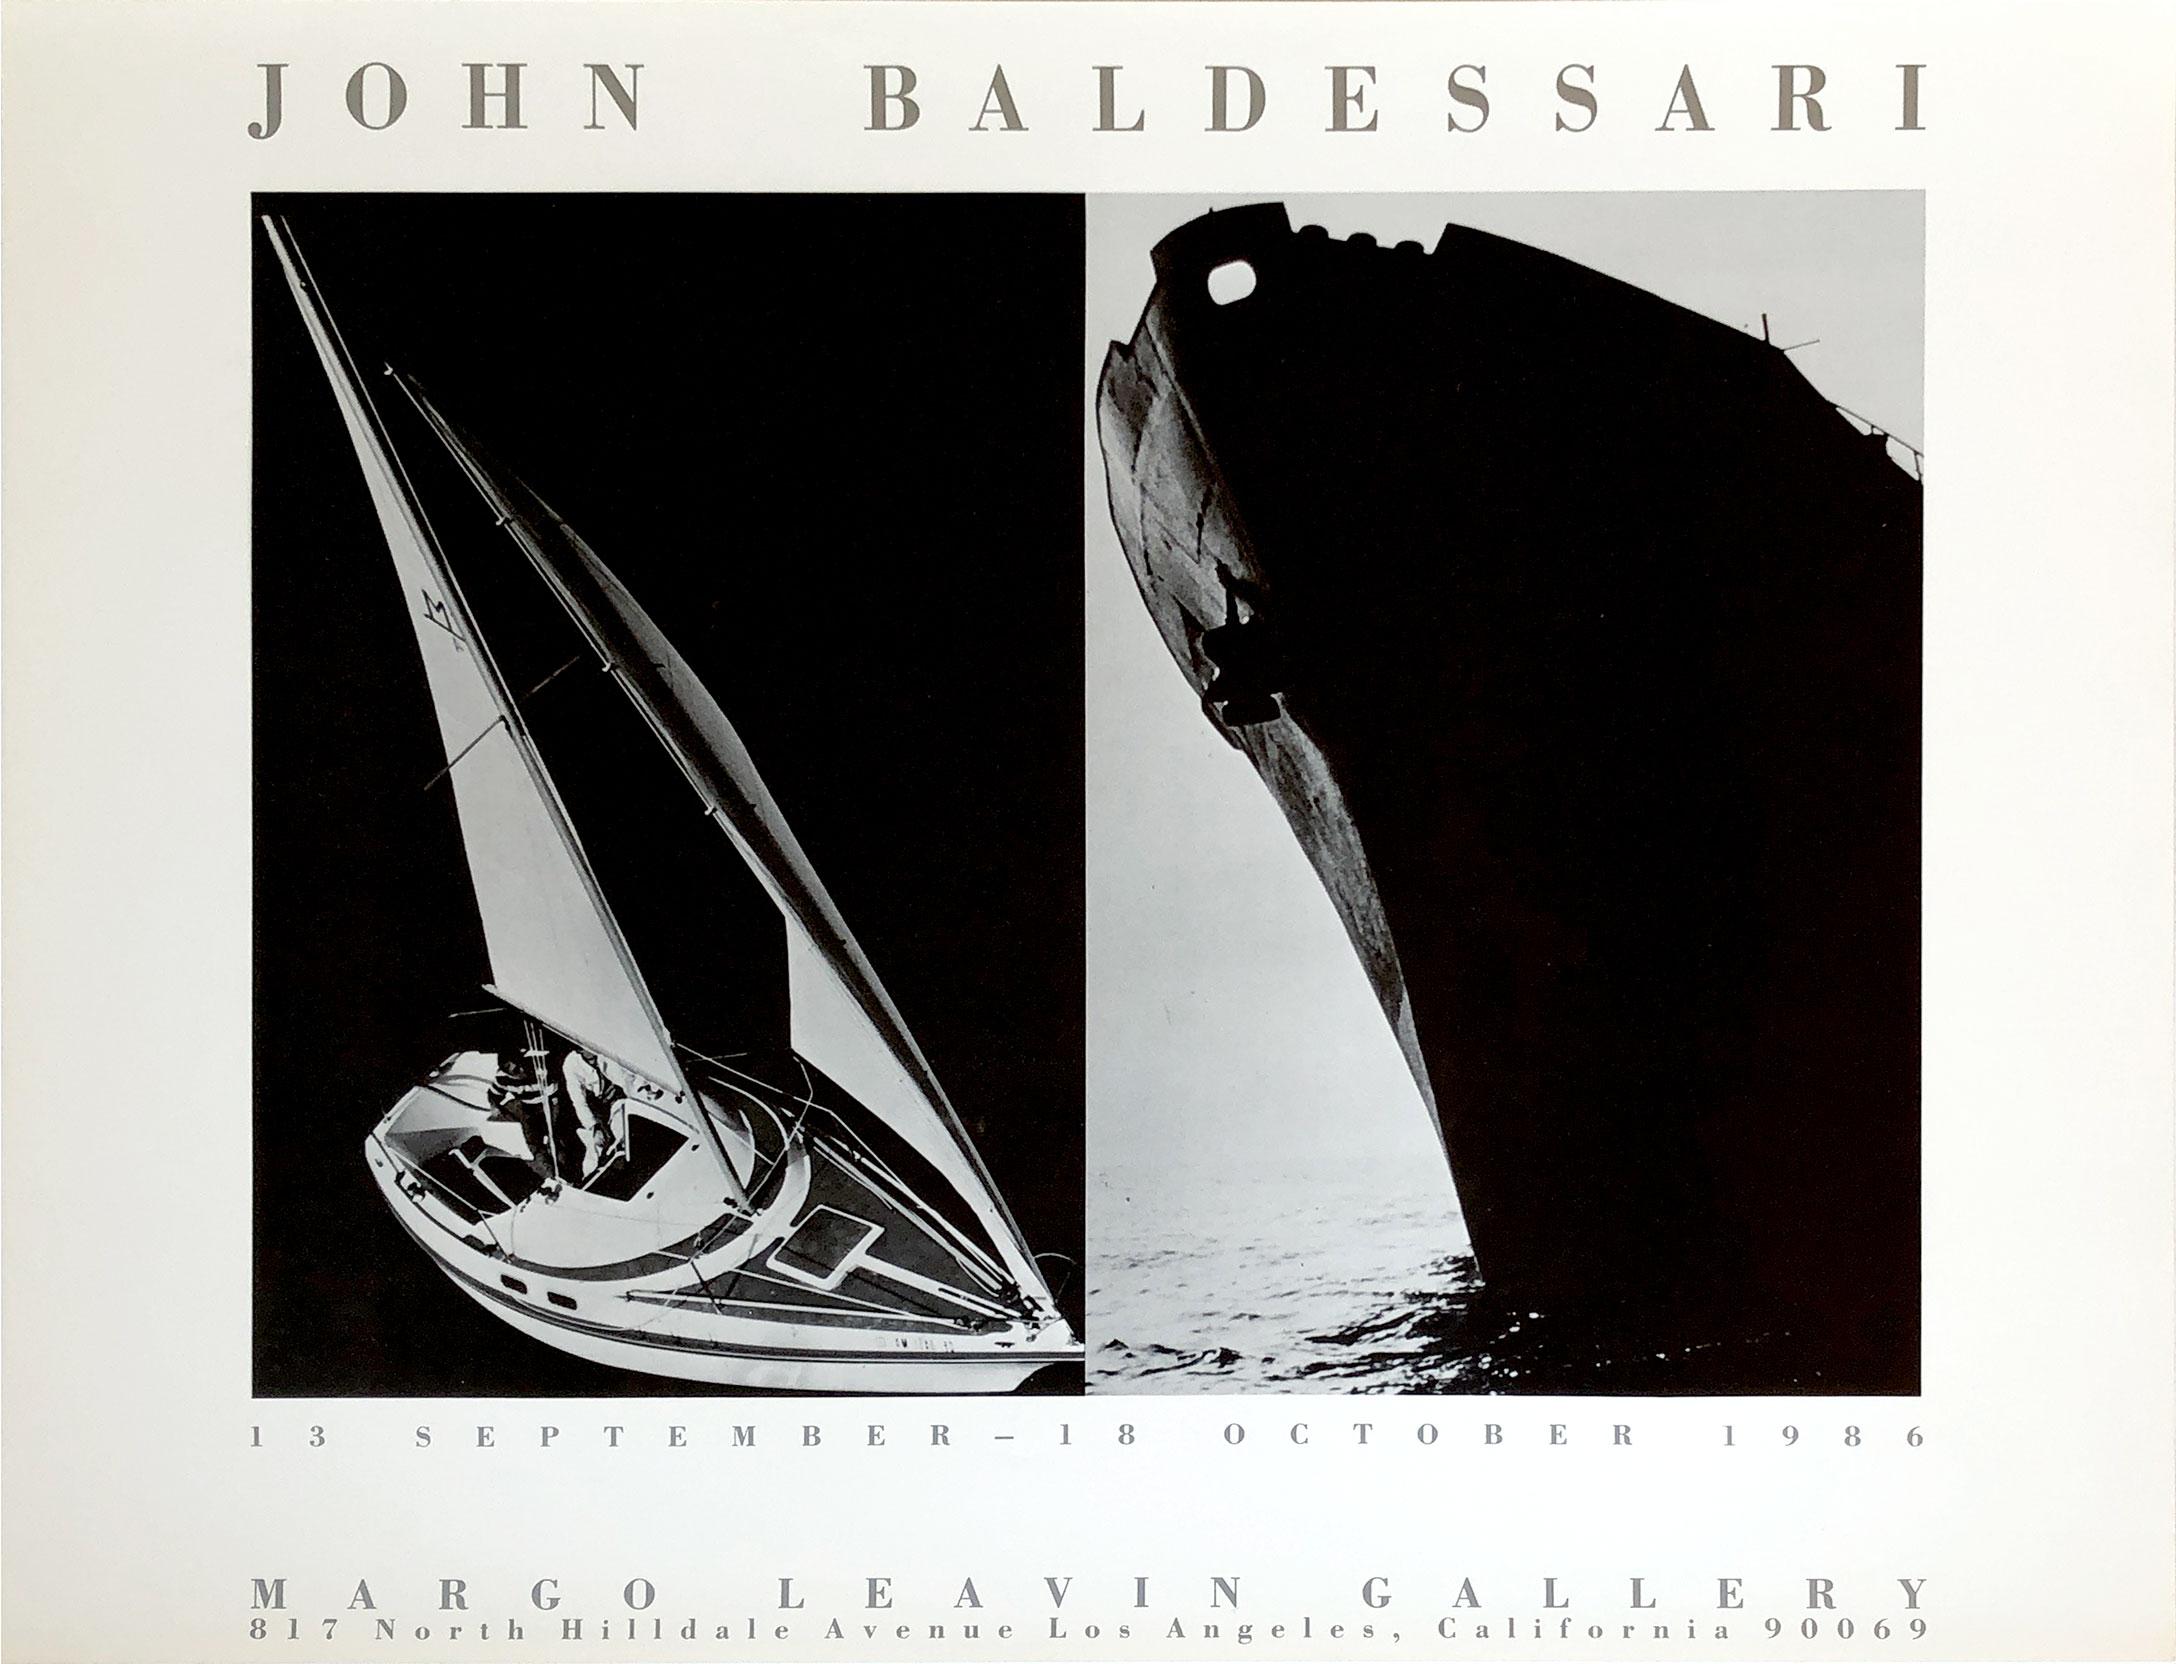 John Baldessari
"John Baldessari [Two Ships]"
Margo Leavin Gallery, Los Angeles, 1986
Affiche de l'exposition
18 x 24 pouces
Non signé